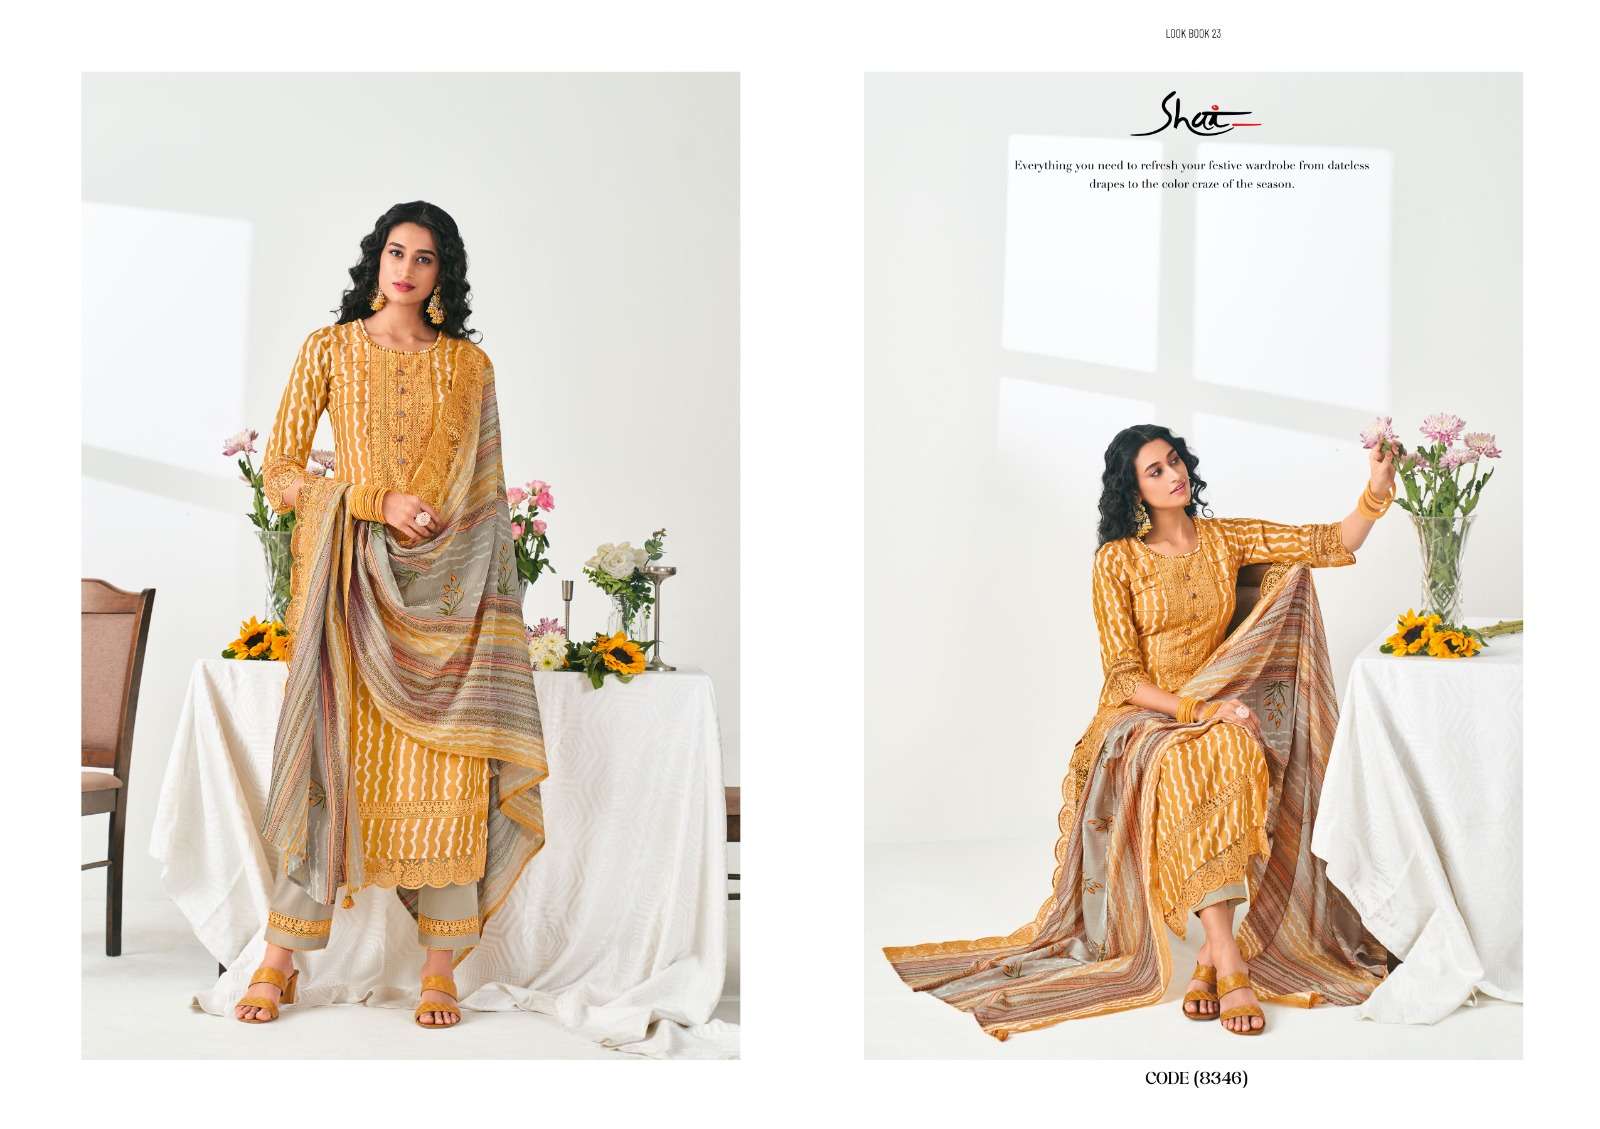 jayvijay khel khel mai vol-2 8341-8348 series exclusive designer salwar kameez catalogue collection 2023